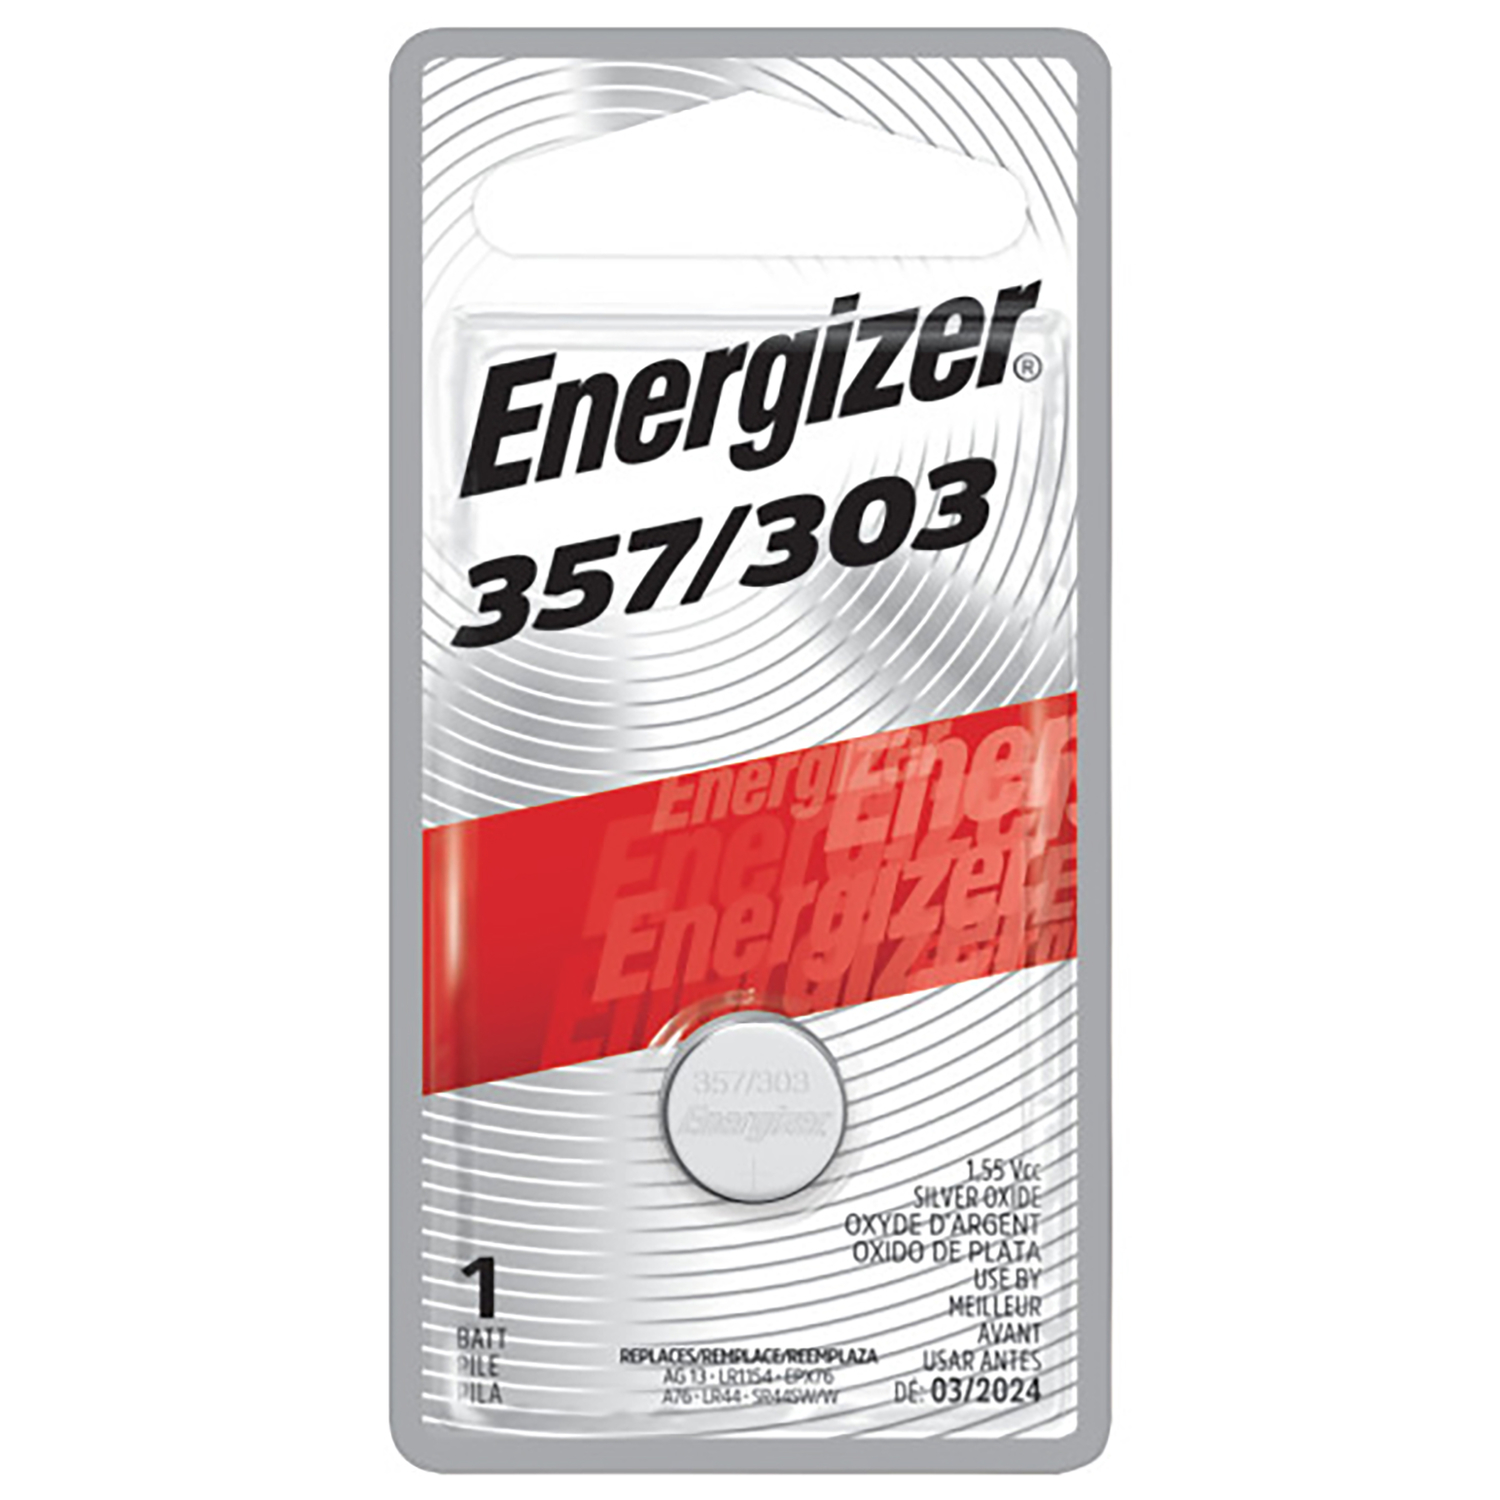 Energizer - 357/303 Batteries, Button Cell Batteries; 7 PACK